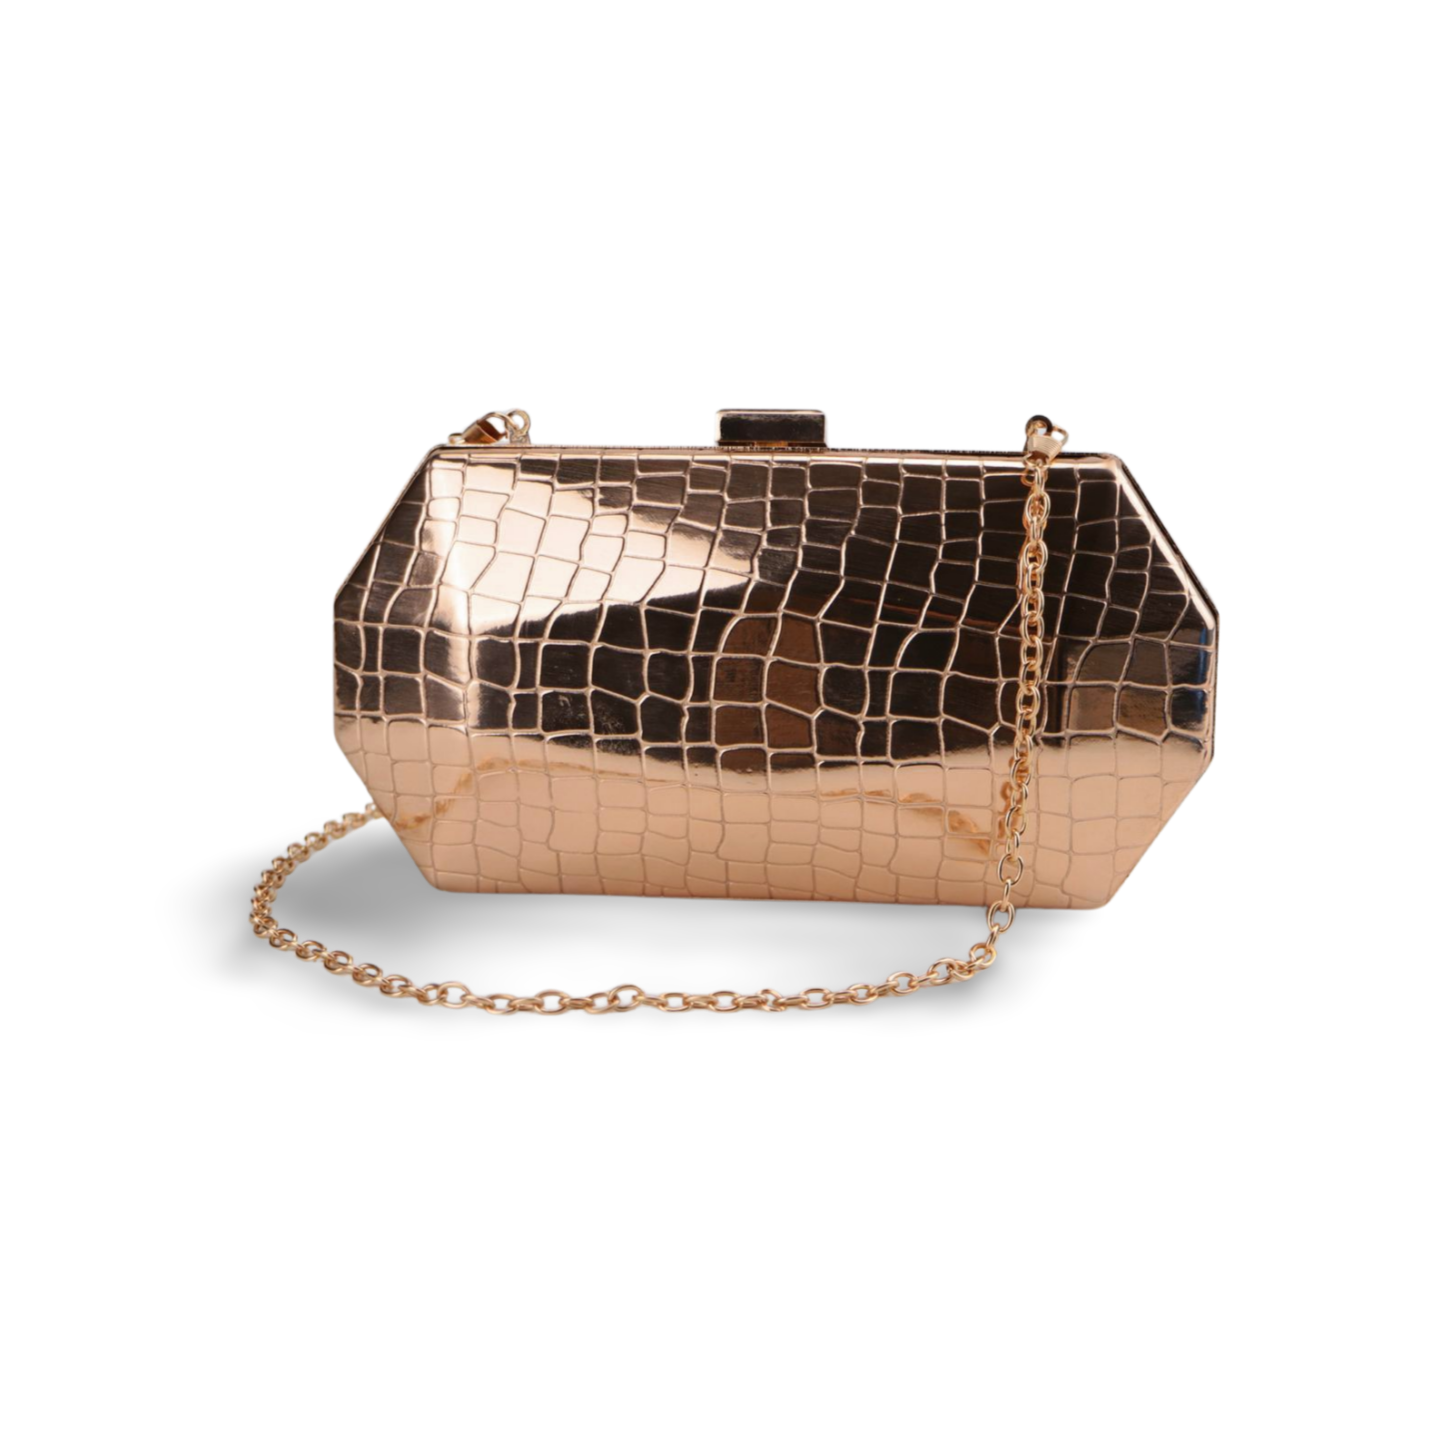 Elegant Metallic Clutch Bag with Detachable Chain Strap